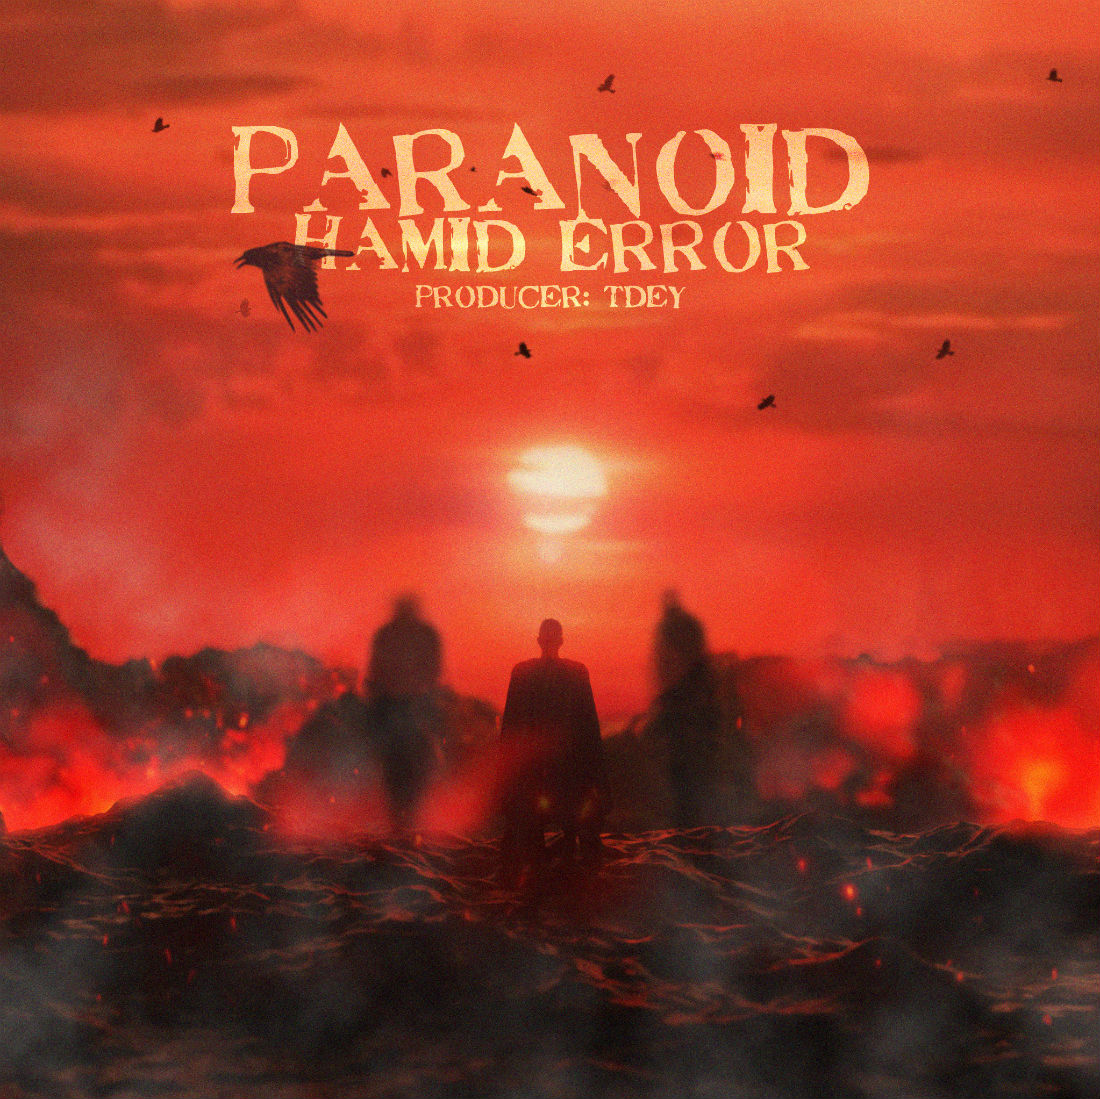 Hamid Error - Paranoid